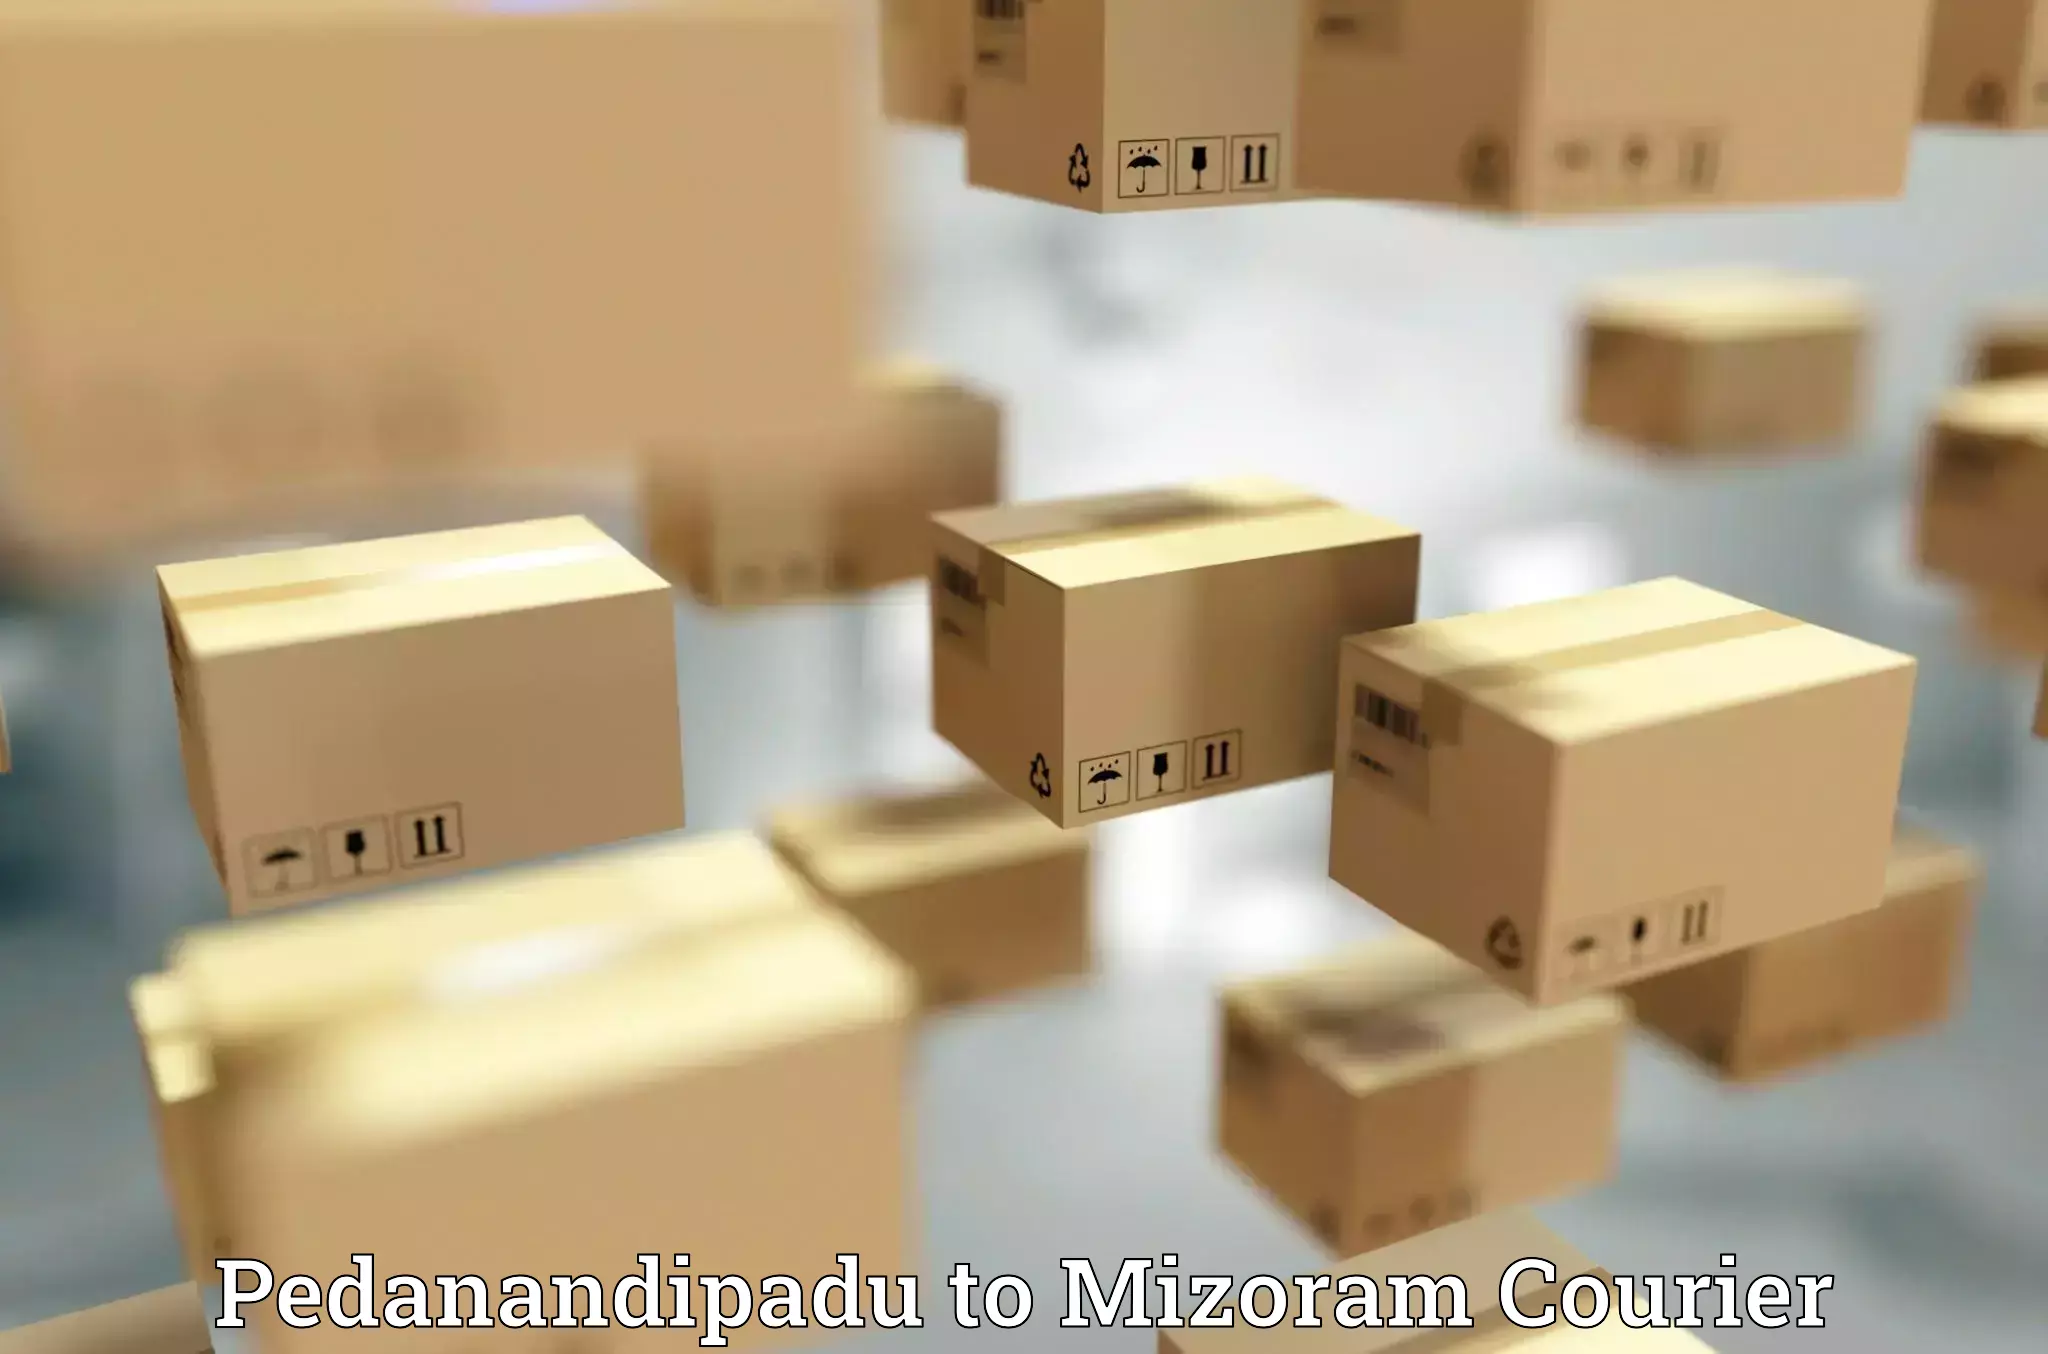 Efficient order fulfillment Pedanandipadu to Mizoram